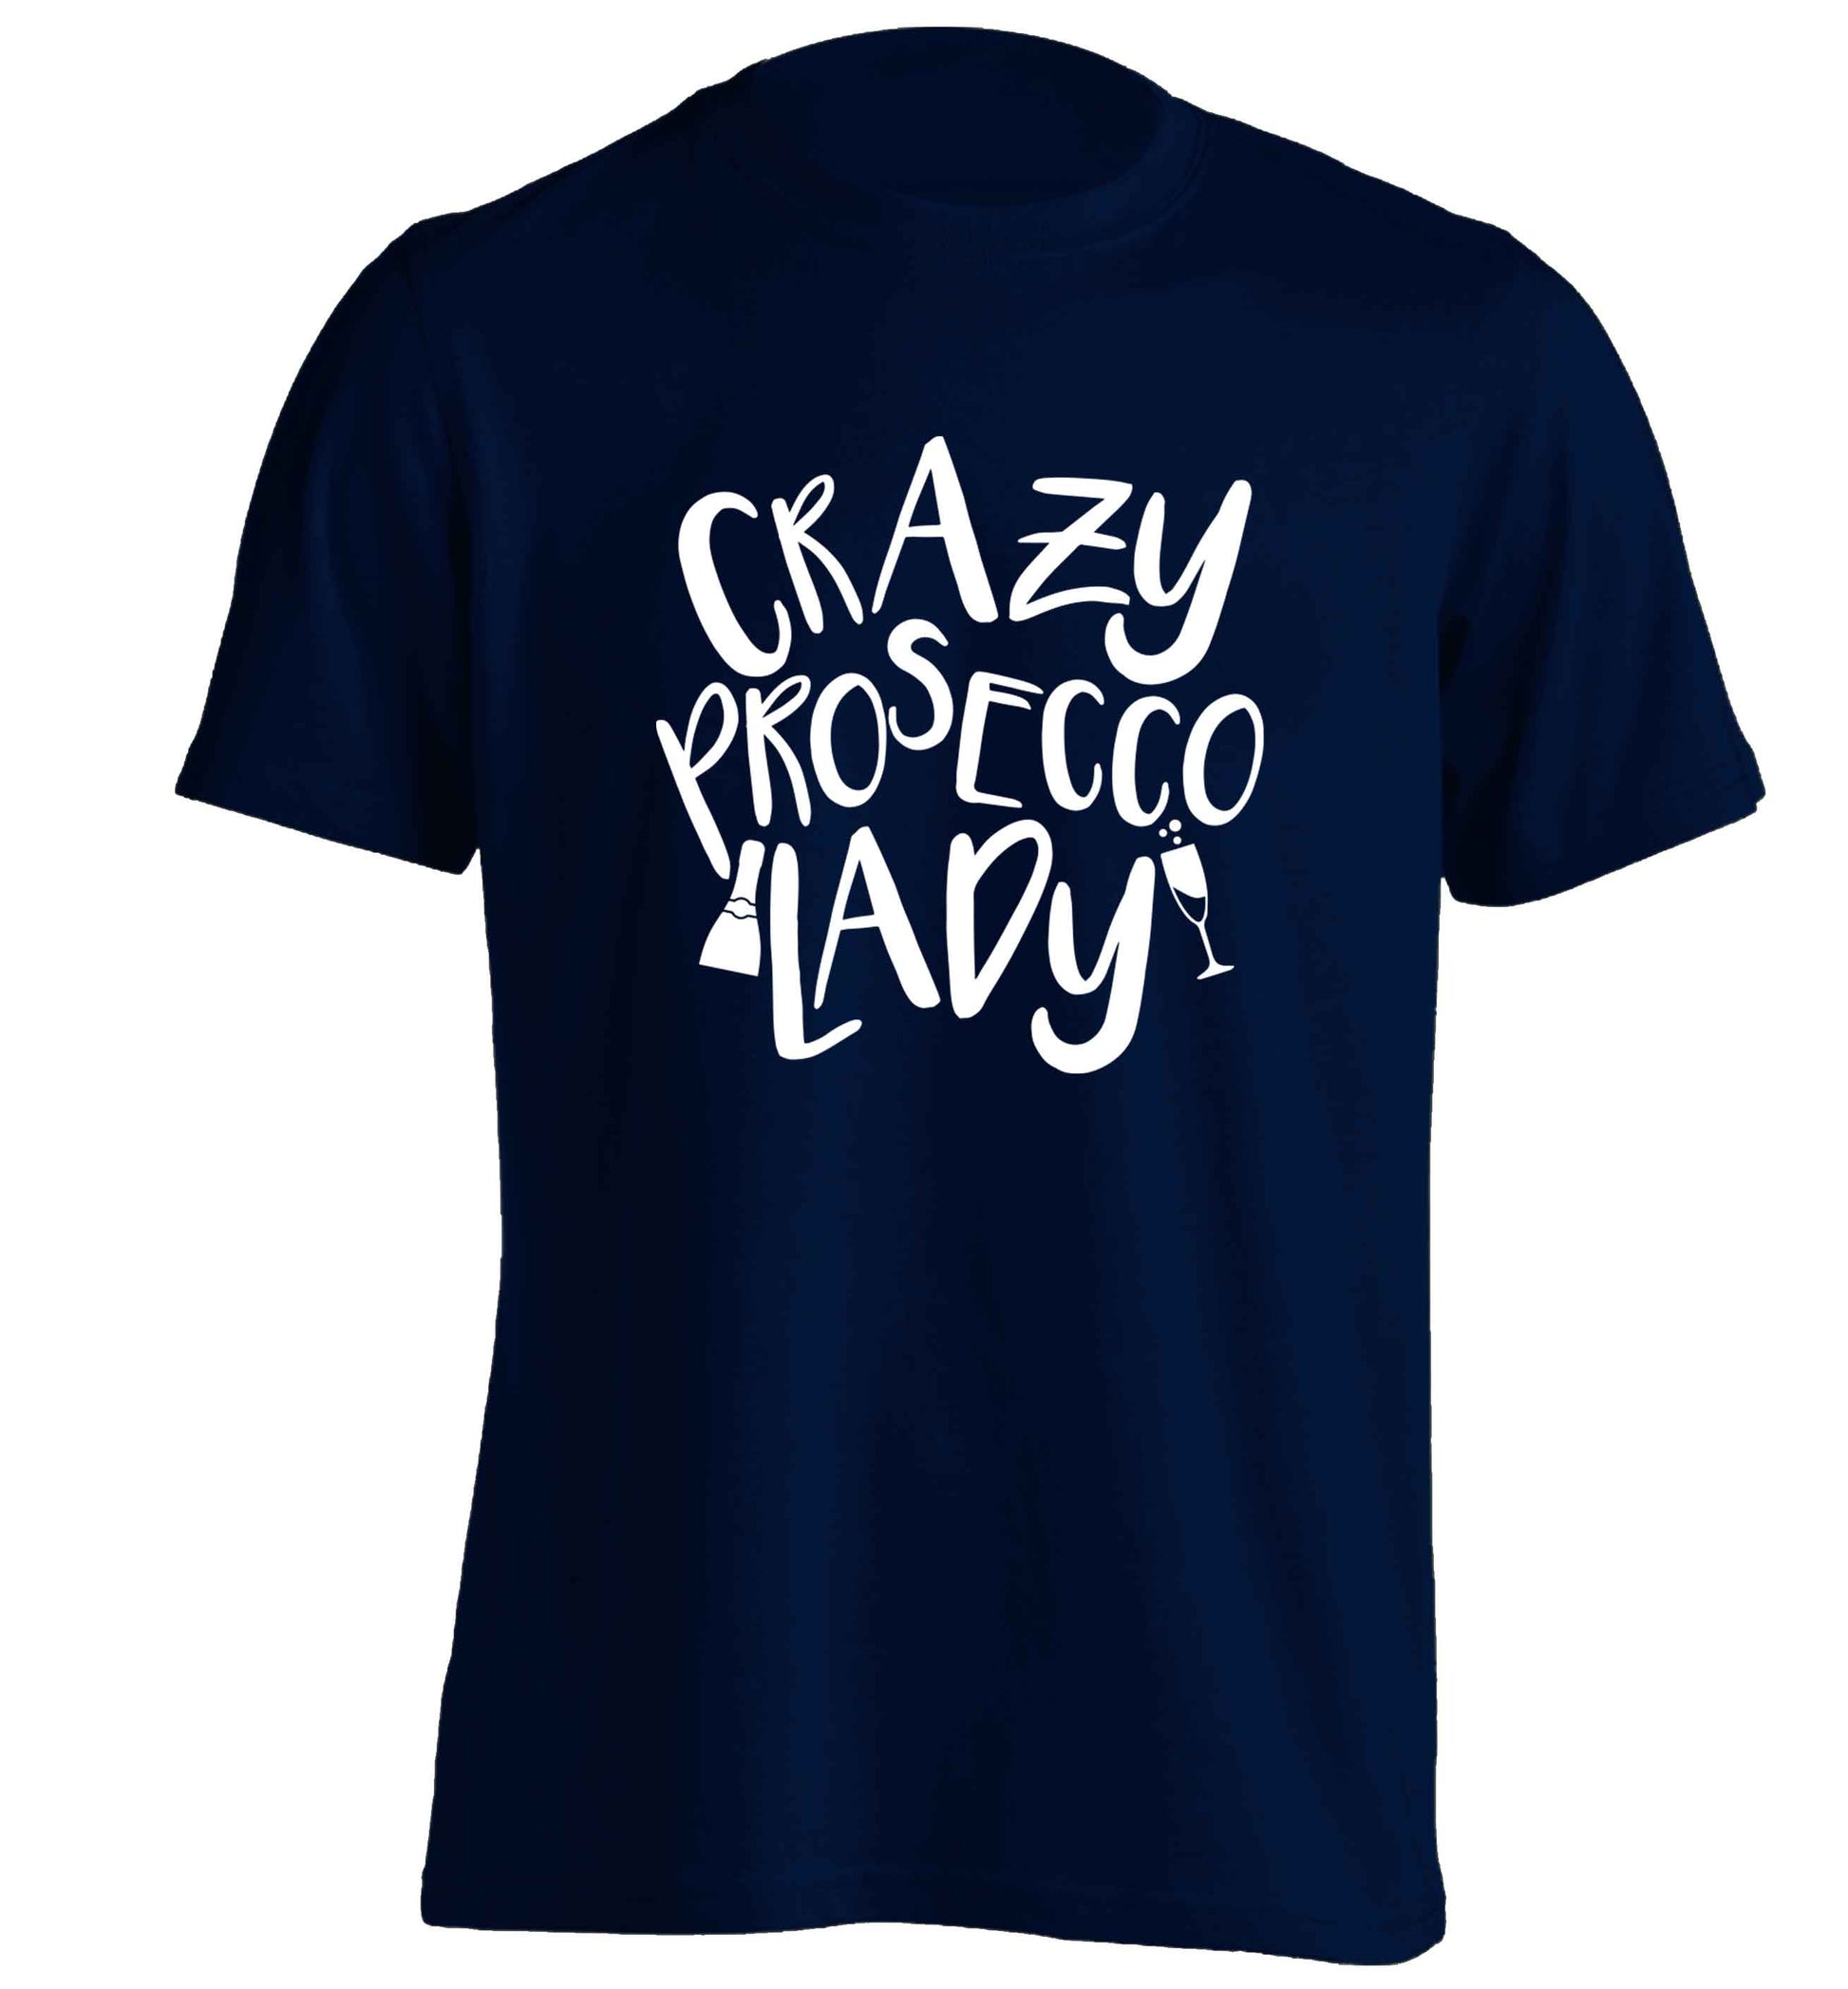 Crazy prosecco lady adults unisex navy Tshirt 2XL